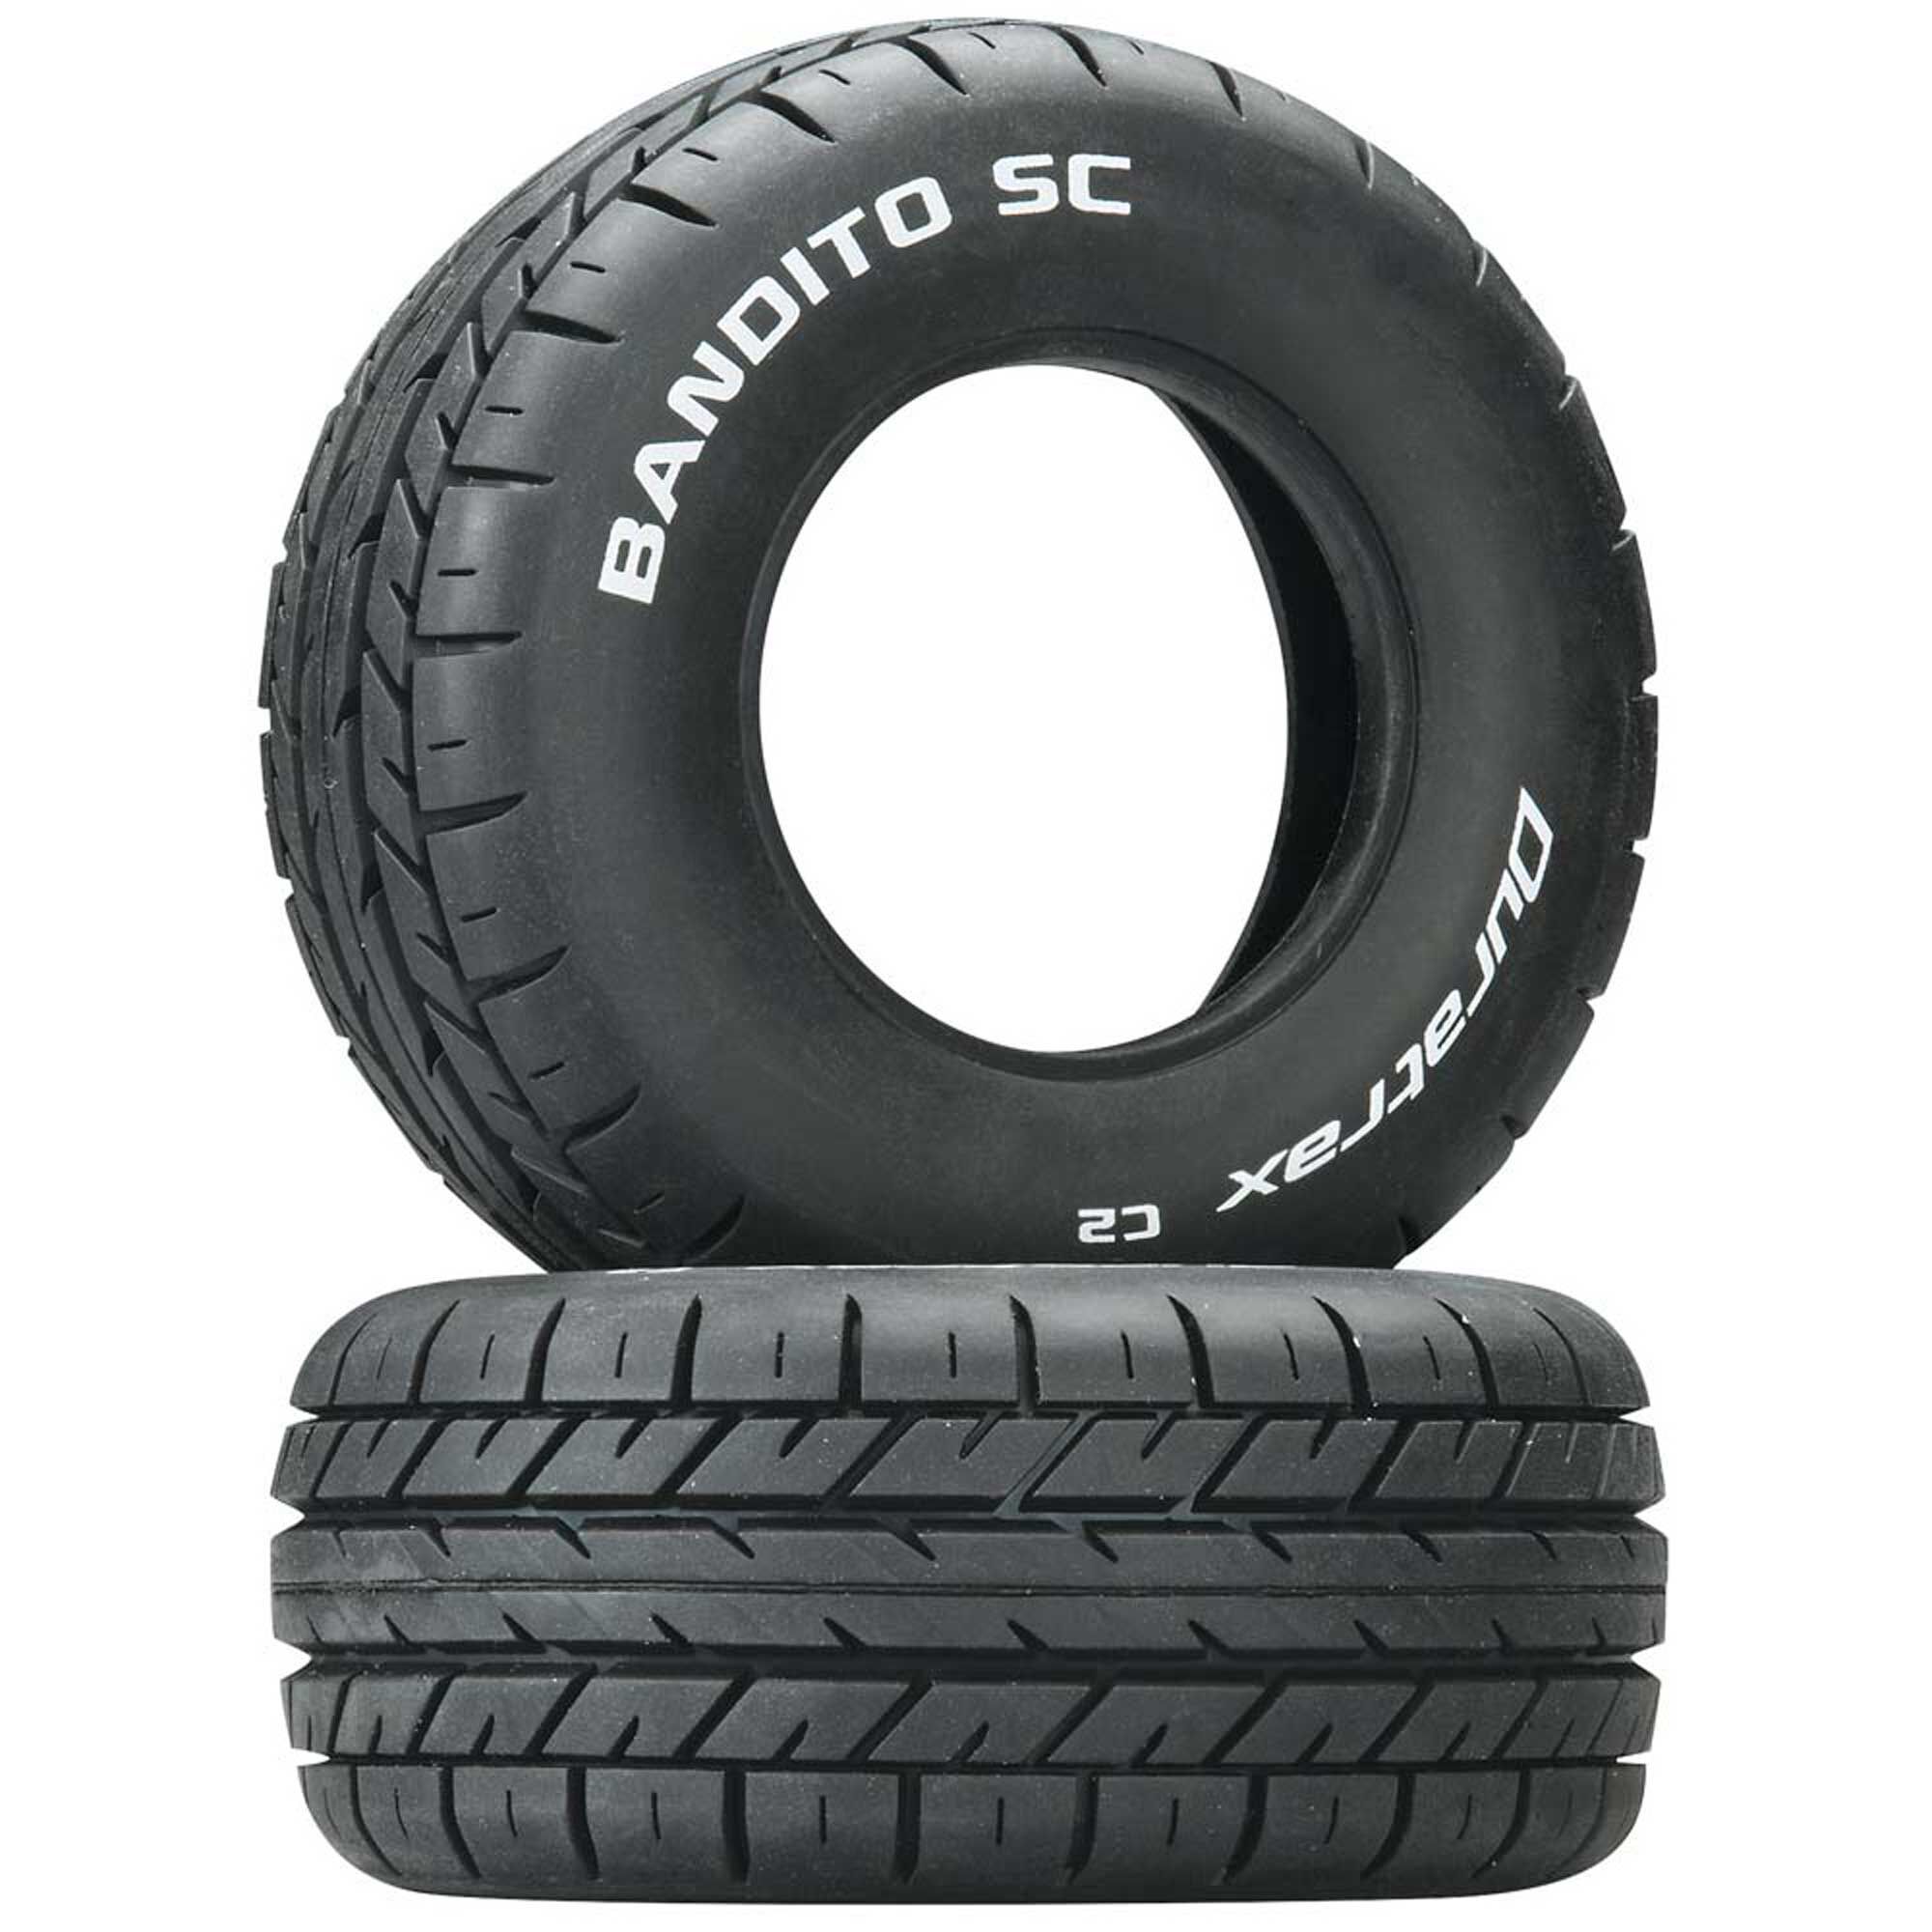 Duratrax Bandito SC Tire C2 Mounted ASC SC10 4x4 2  DTXC3702